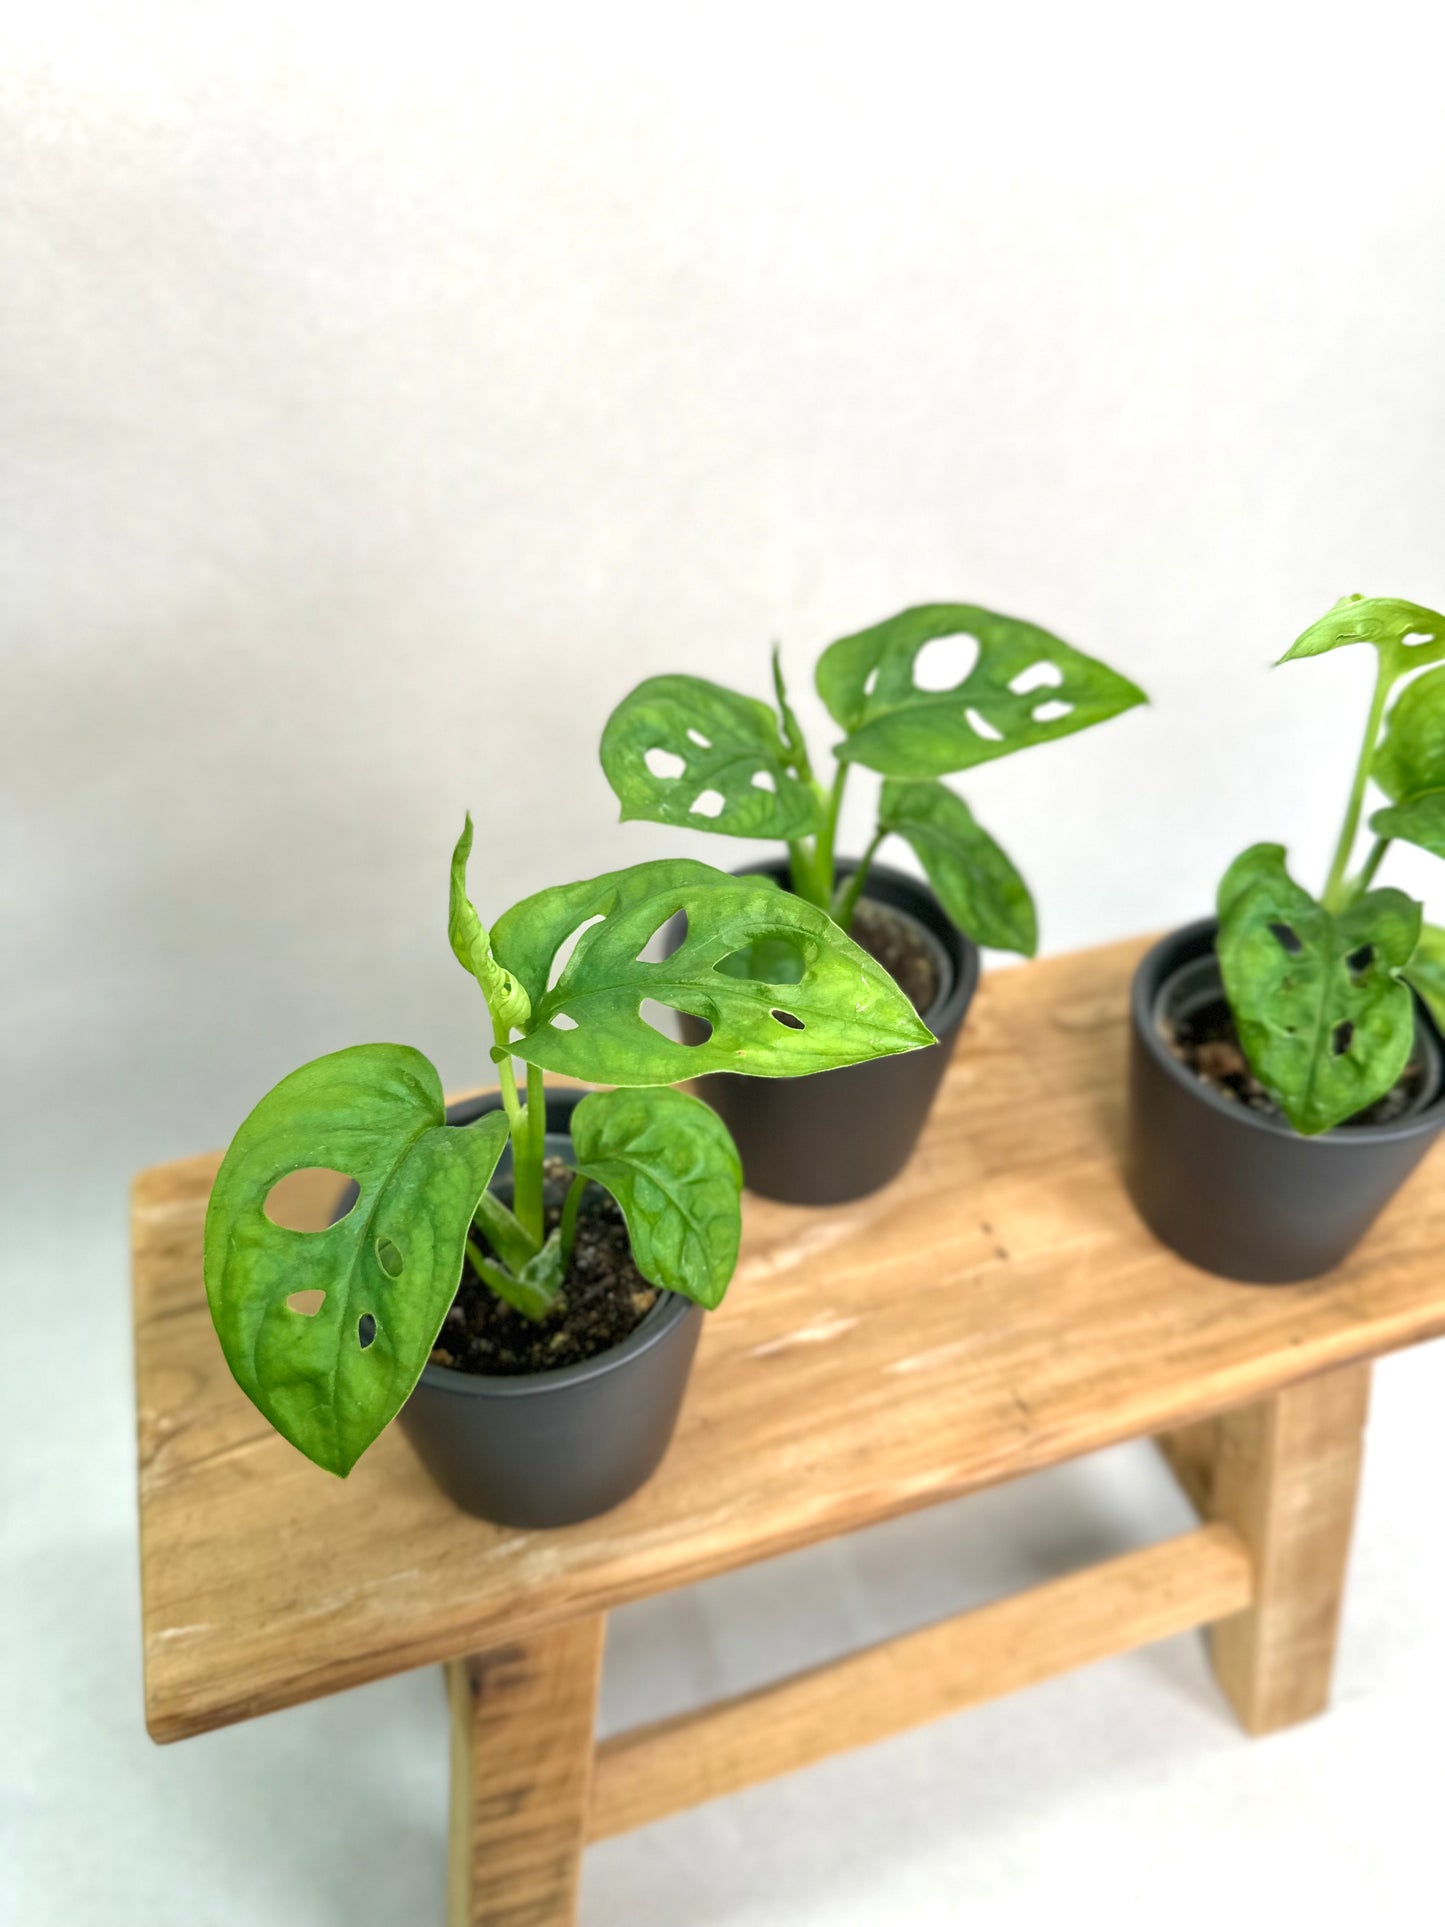 Monstera Adansonii - Baby plant